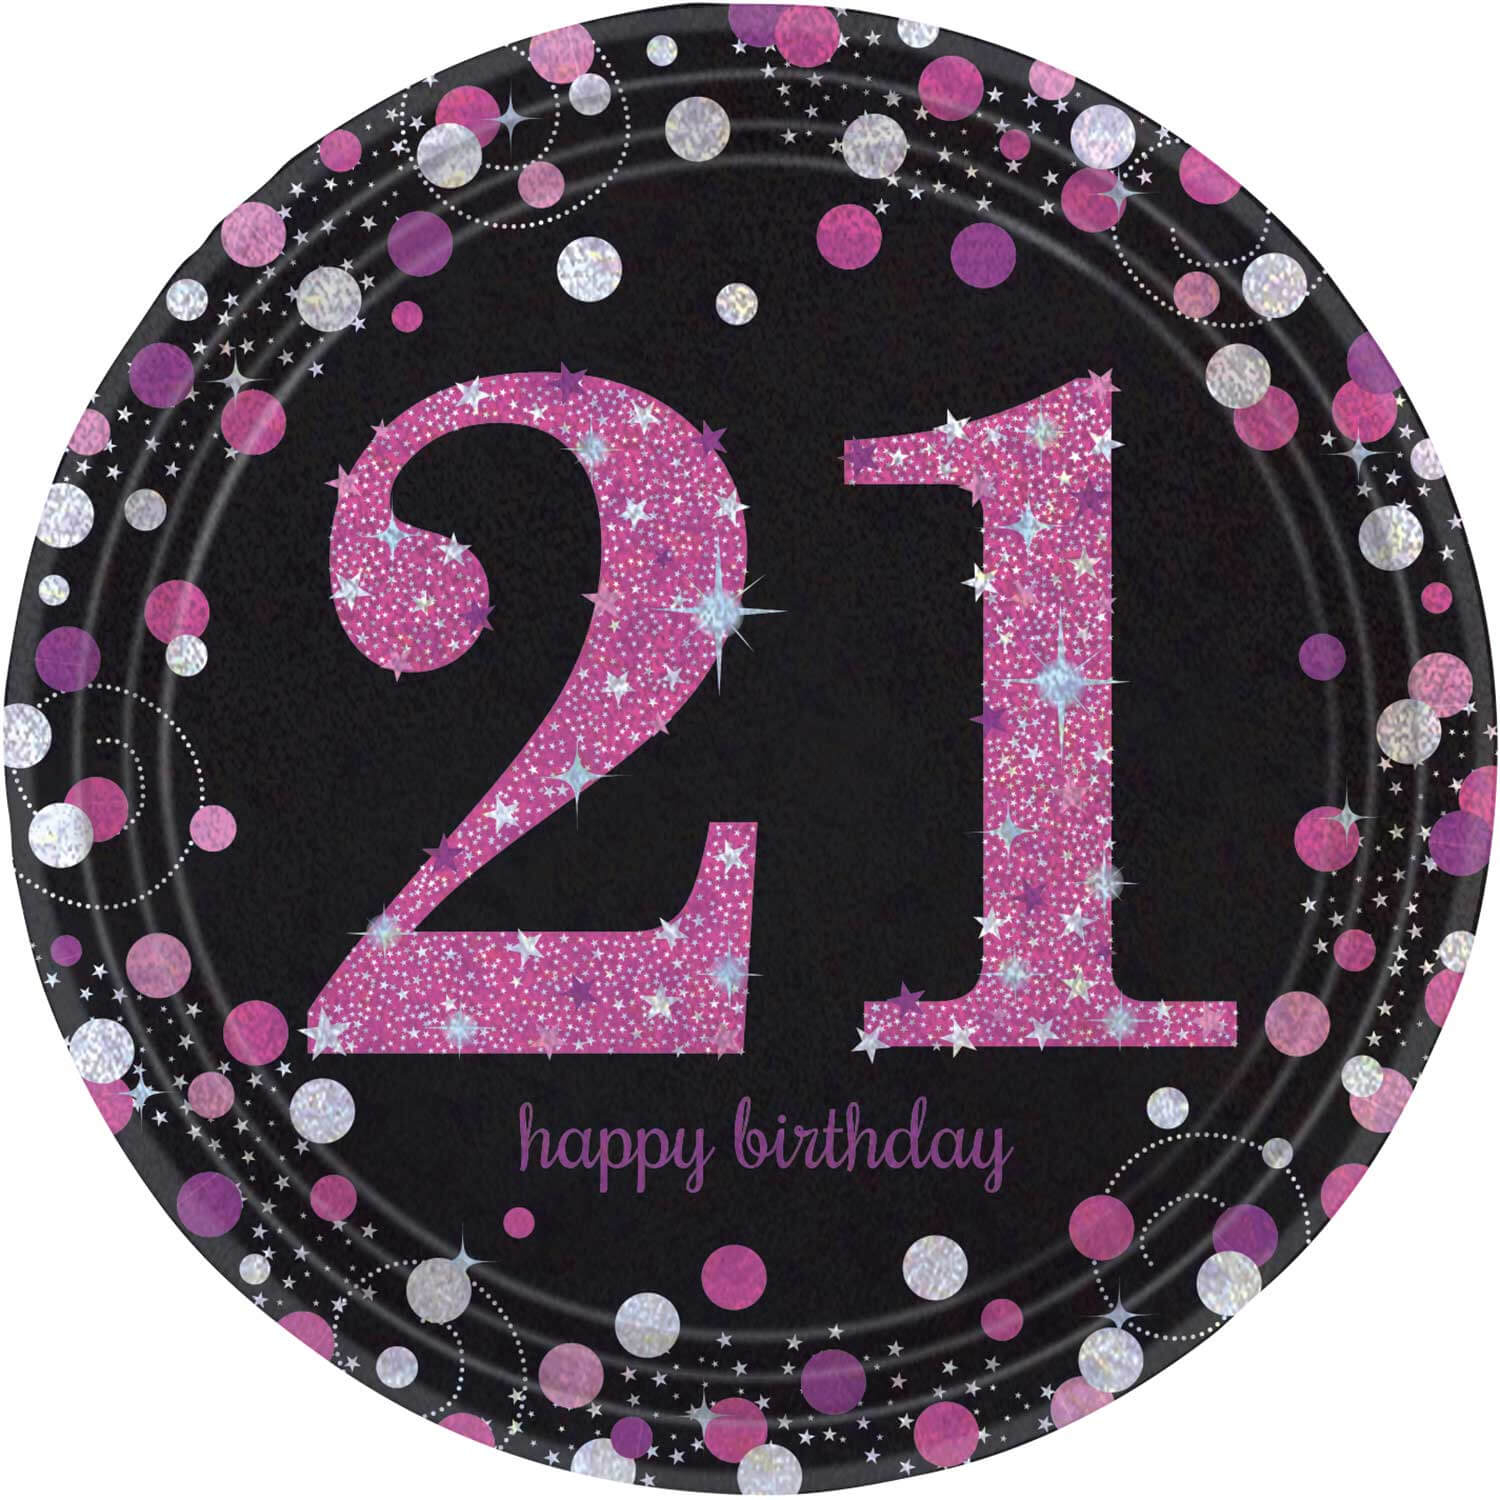 17 апреля 21 год. С днем рождения 21. Поздравление с днем рождения 21 год. С днём рождения 21 год девушке. Открытка 21 год др.